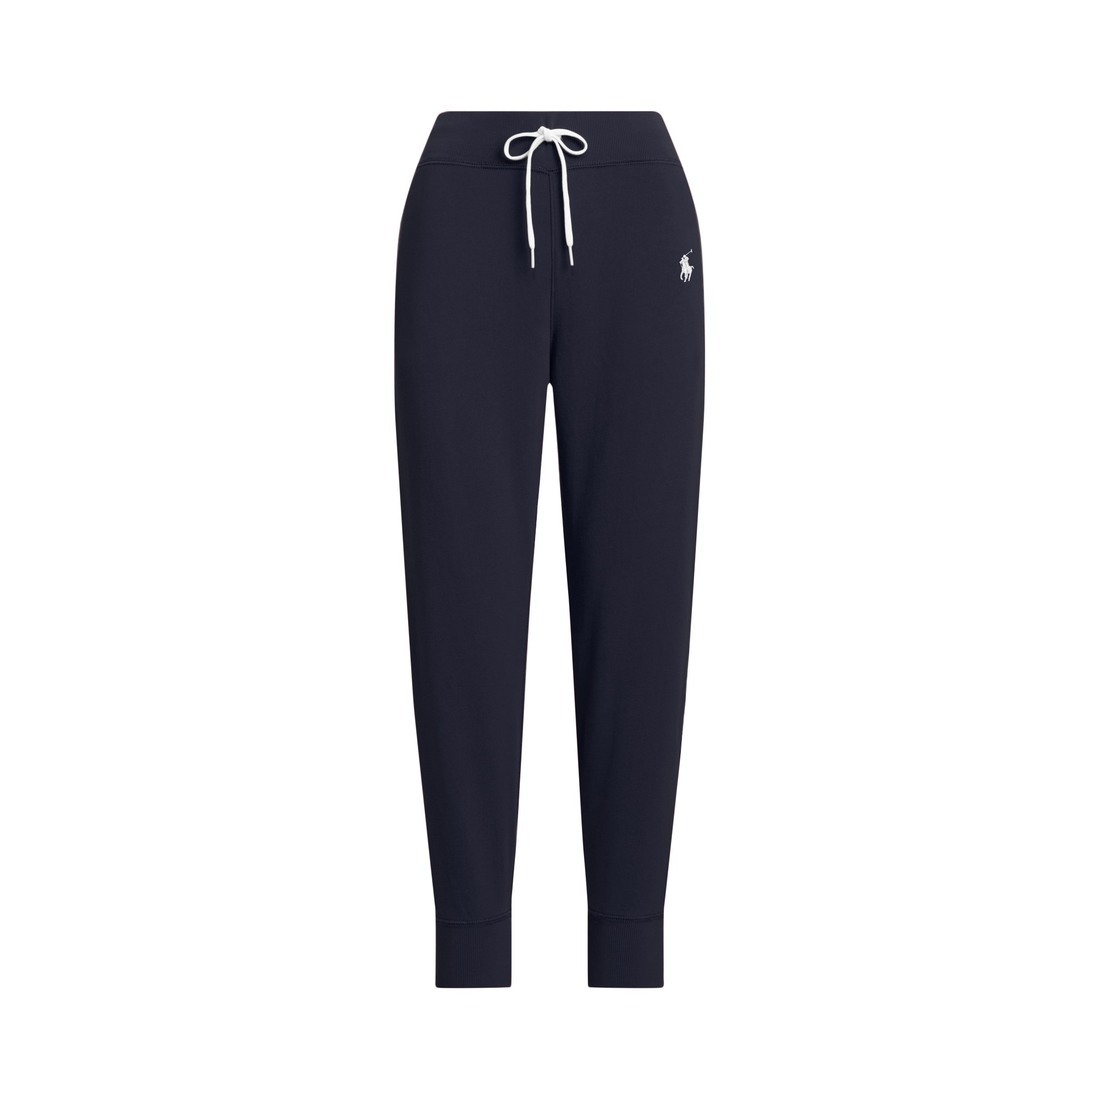 Polo Ralph Lauren Women's Fleece Athletic Trousers - 211891560003 - Fuel